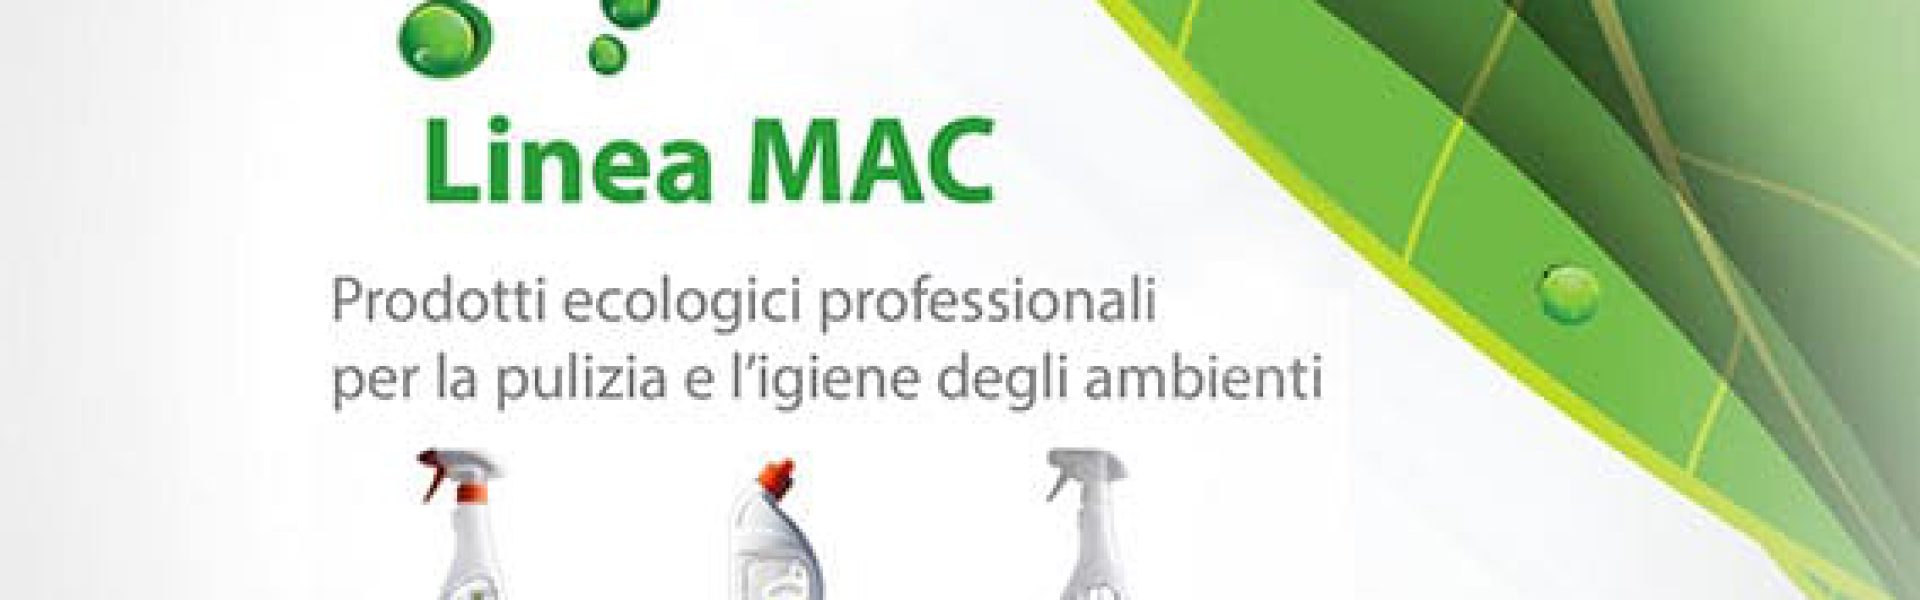 linea_mac